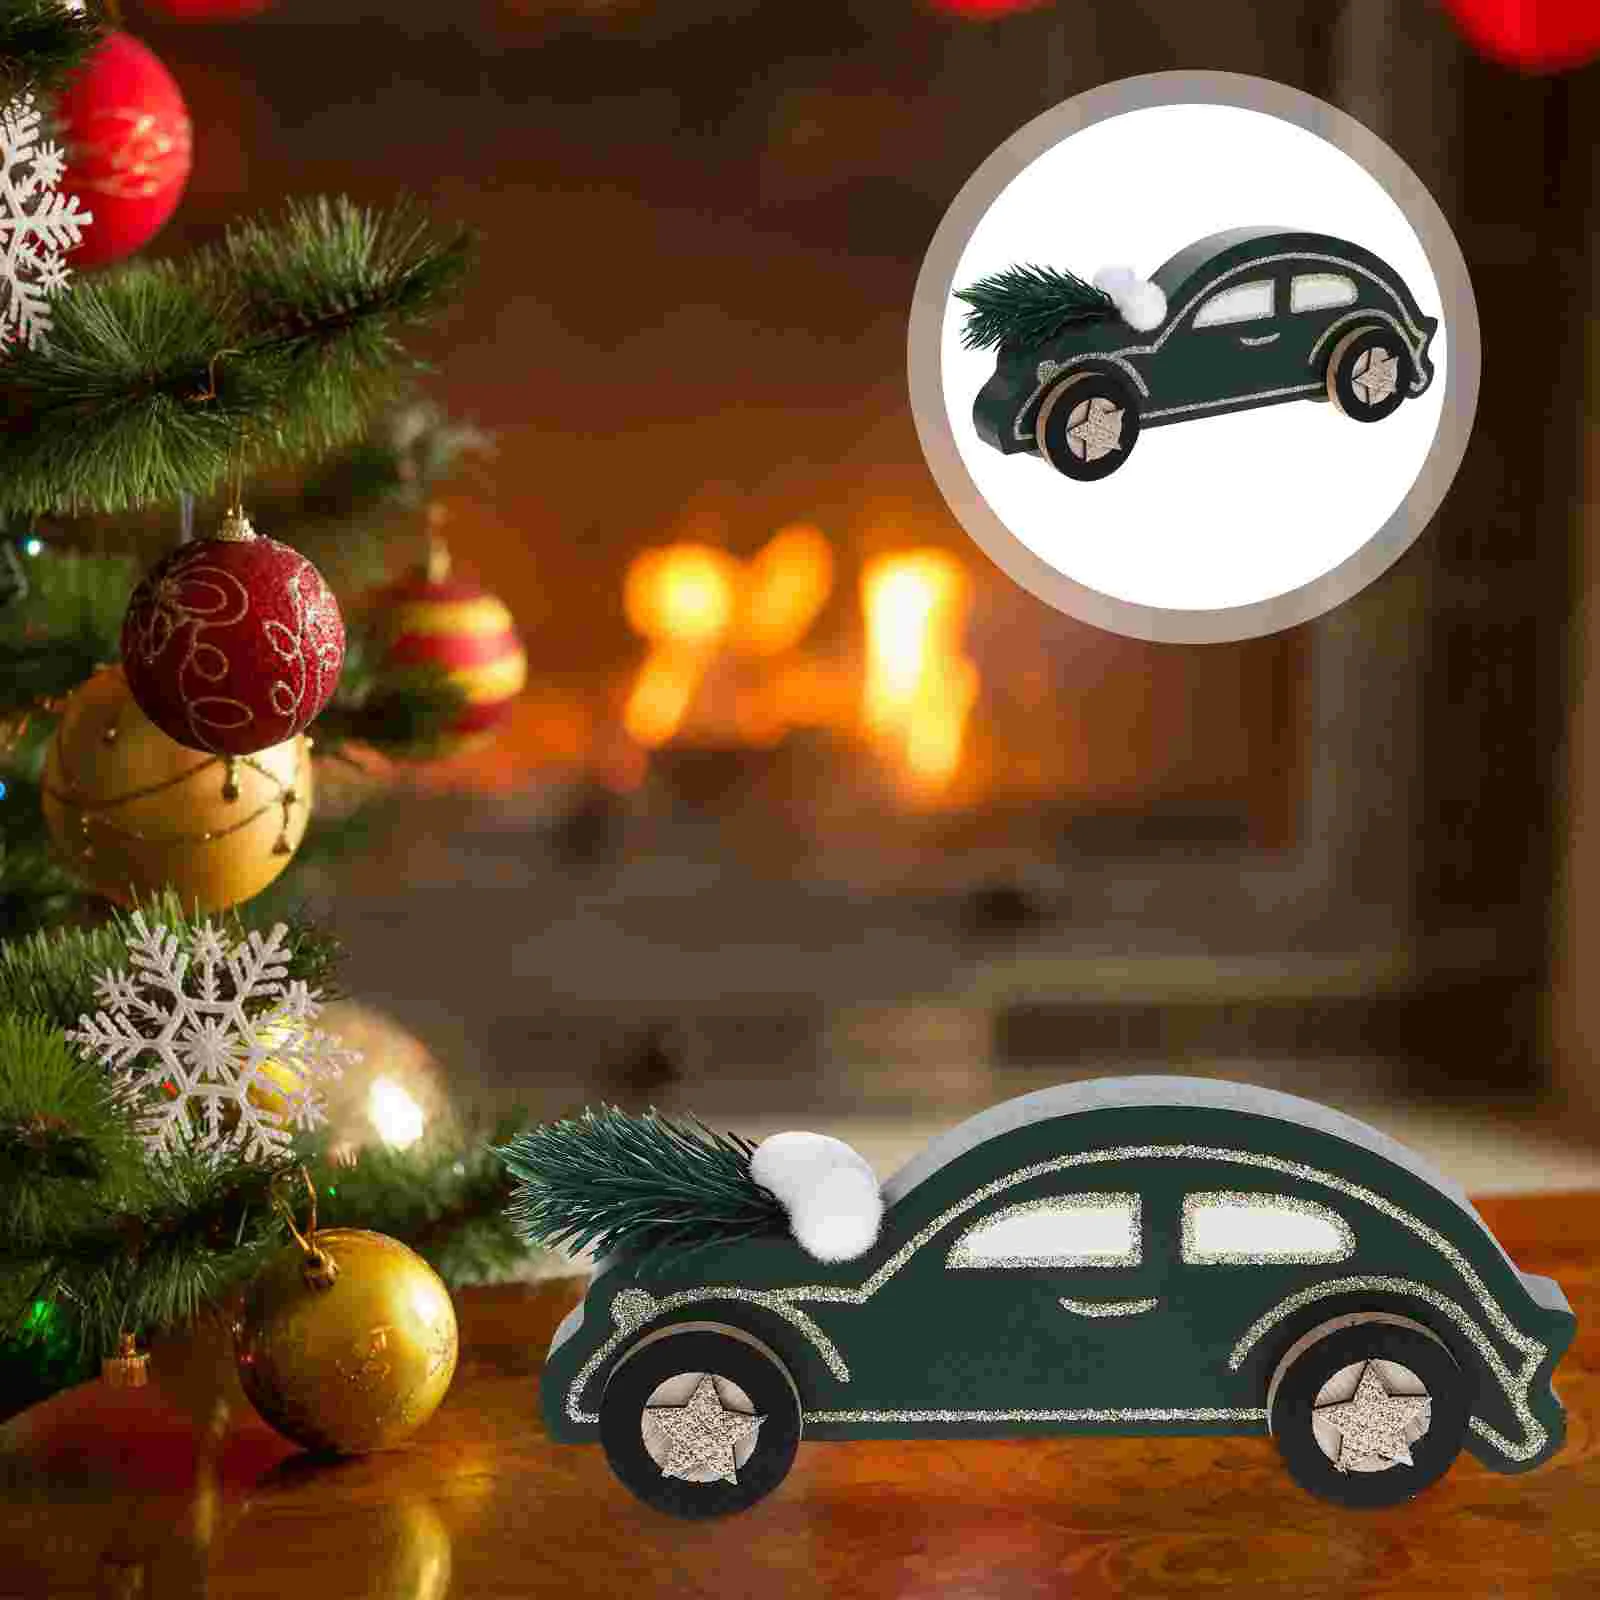 

The Gift Christmas Car Table Centerpiece Festival Adornment Decor Crafts Desktop Xmas Ornament Party Decoration